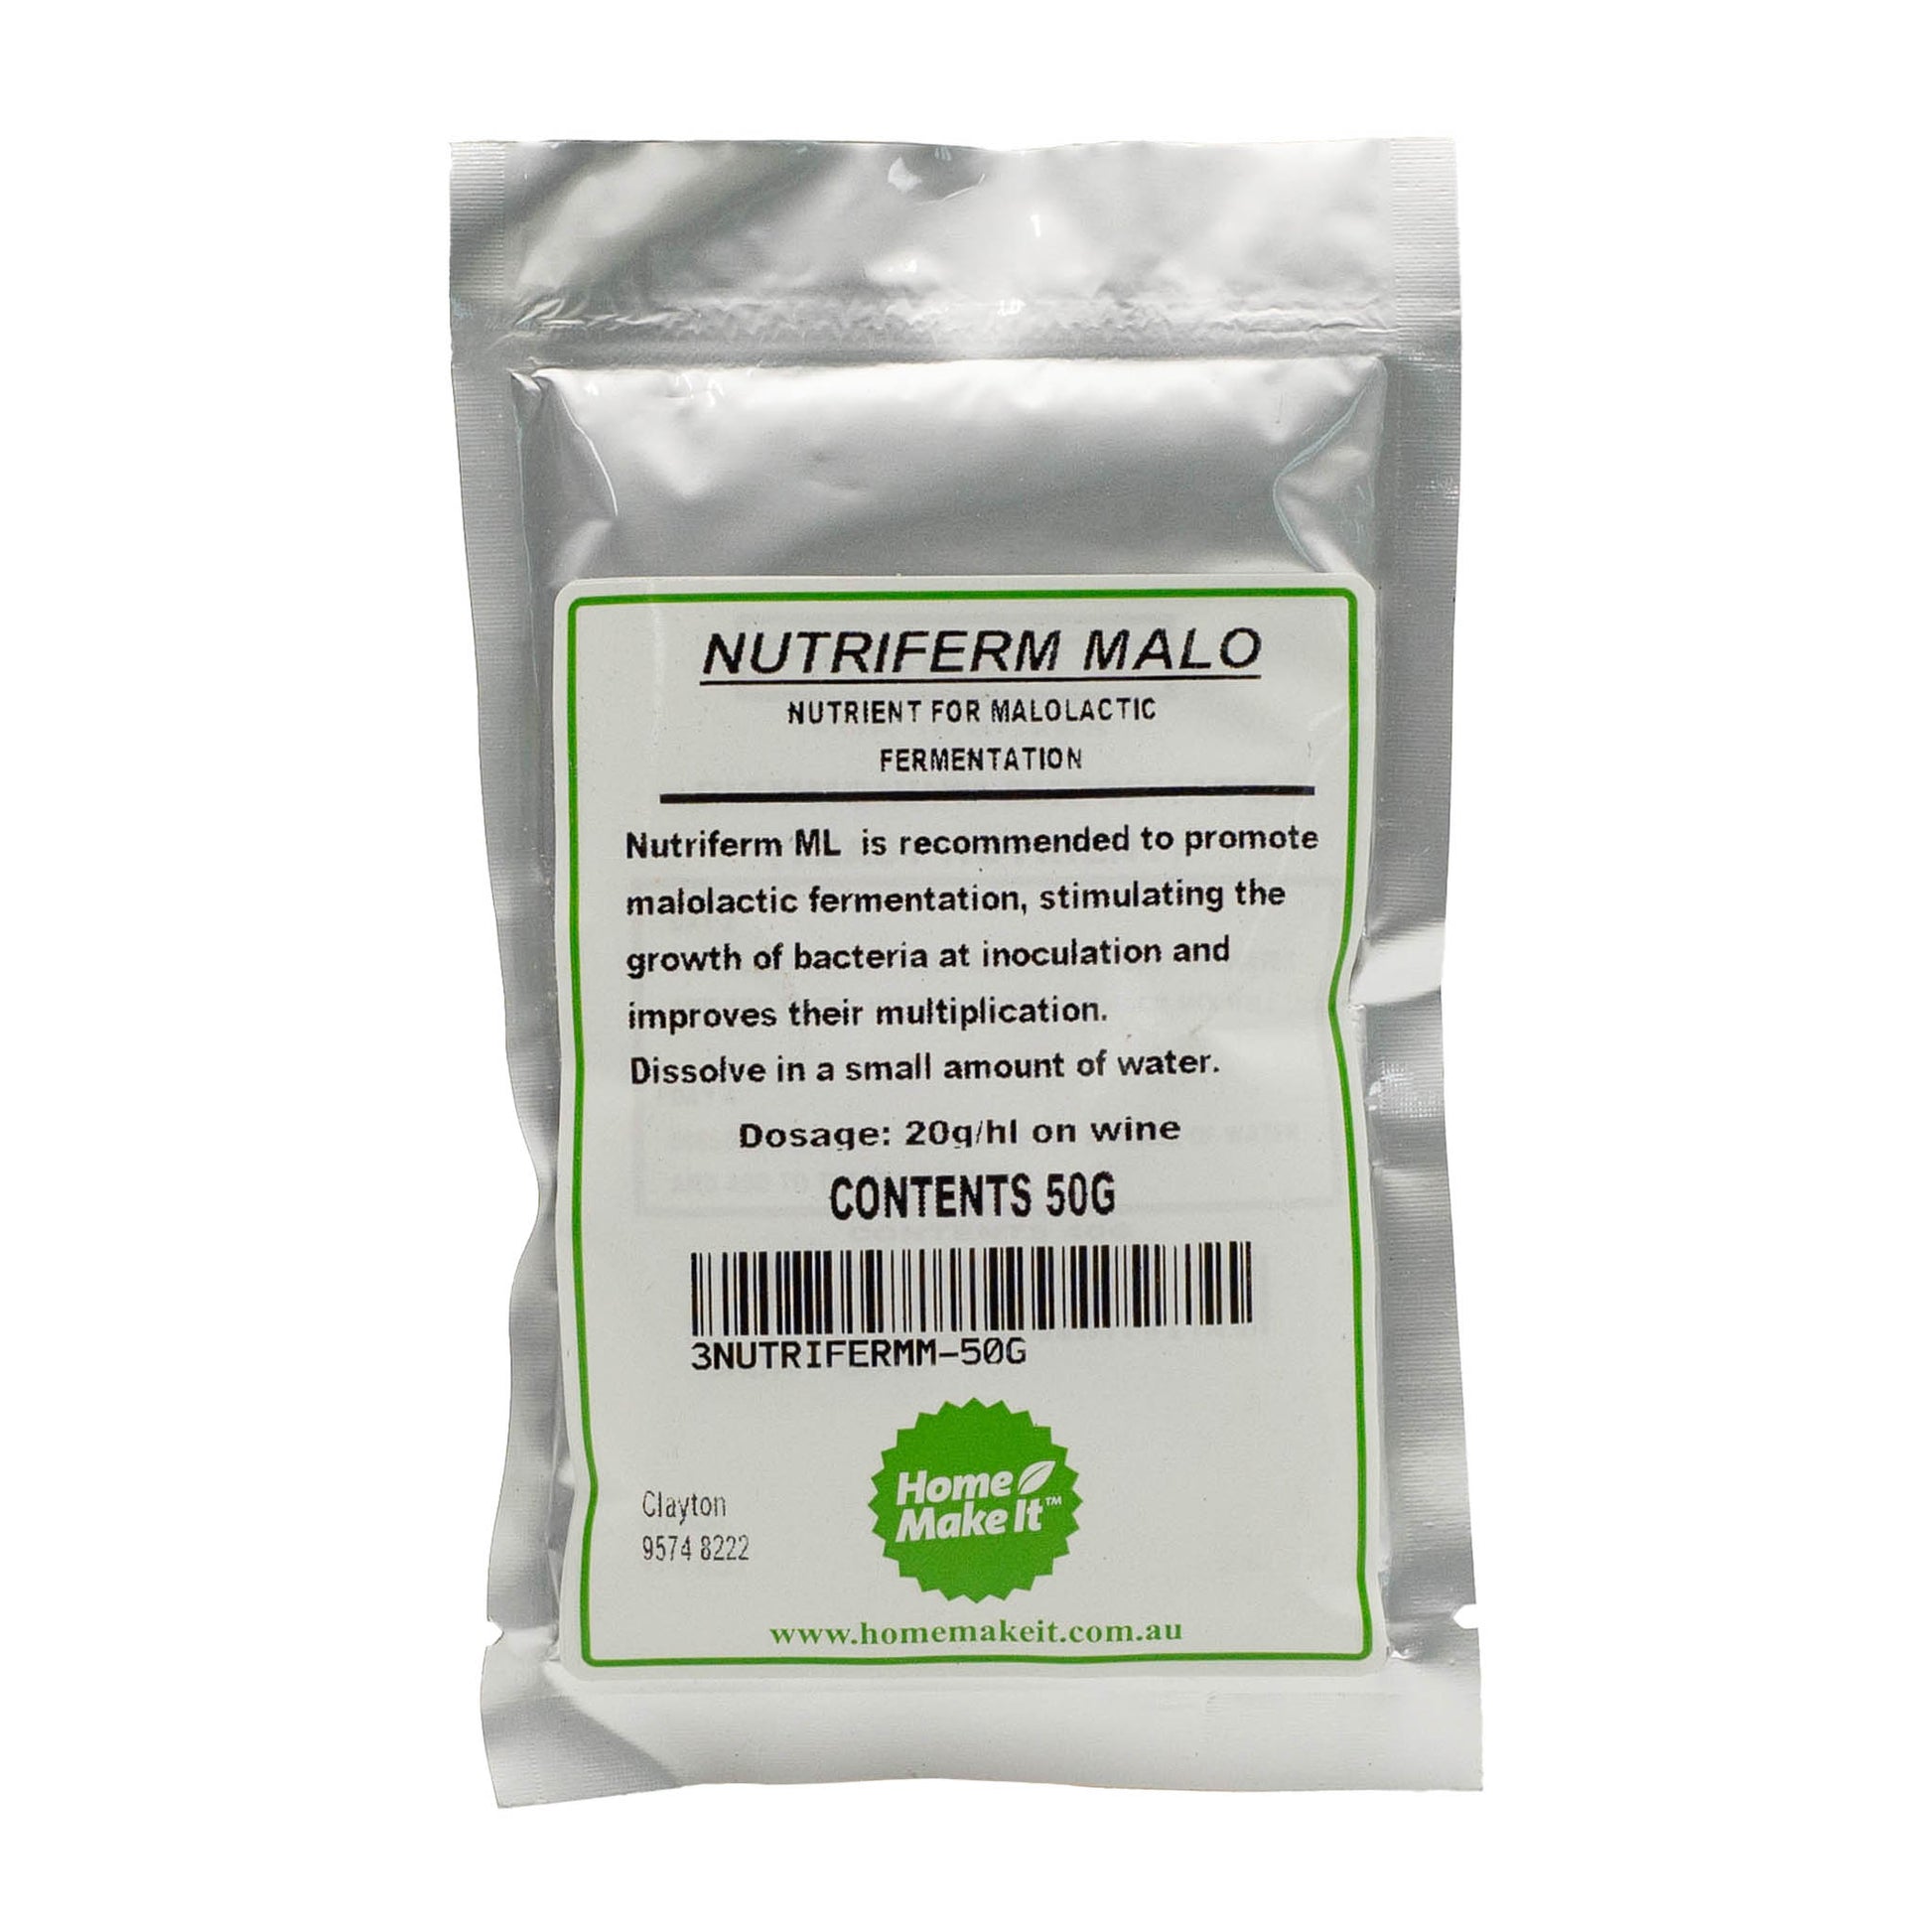 50g bag of nutriferm Malo to promote malolactic fermentation. 